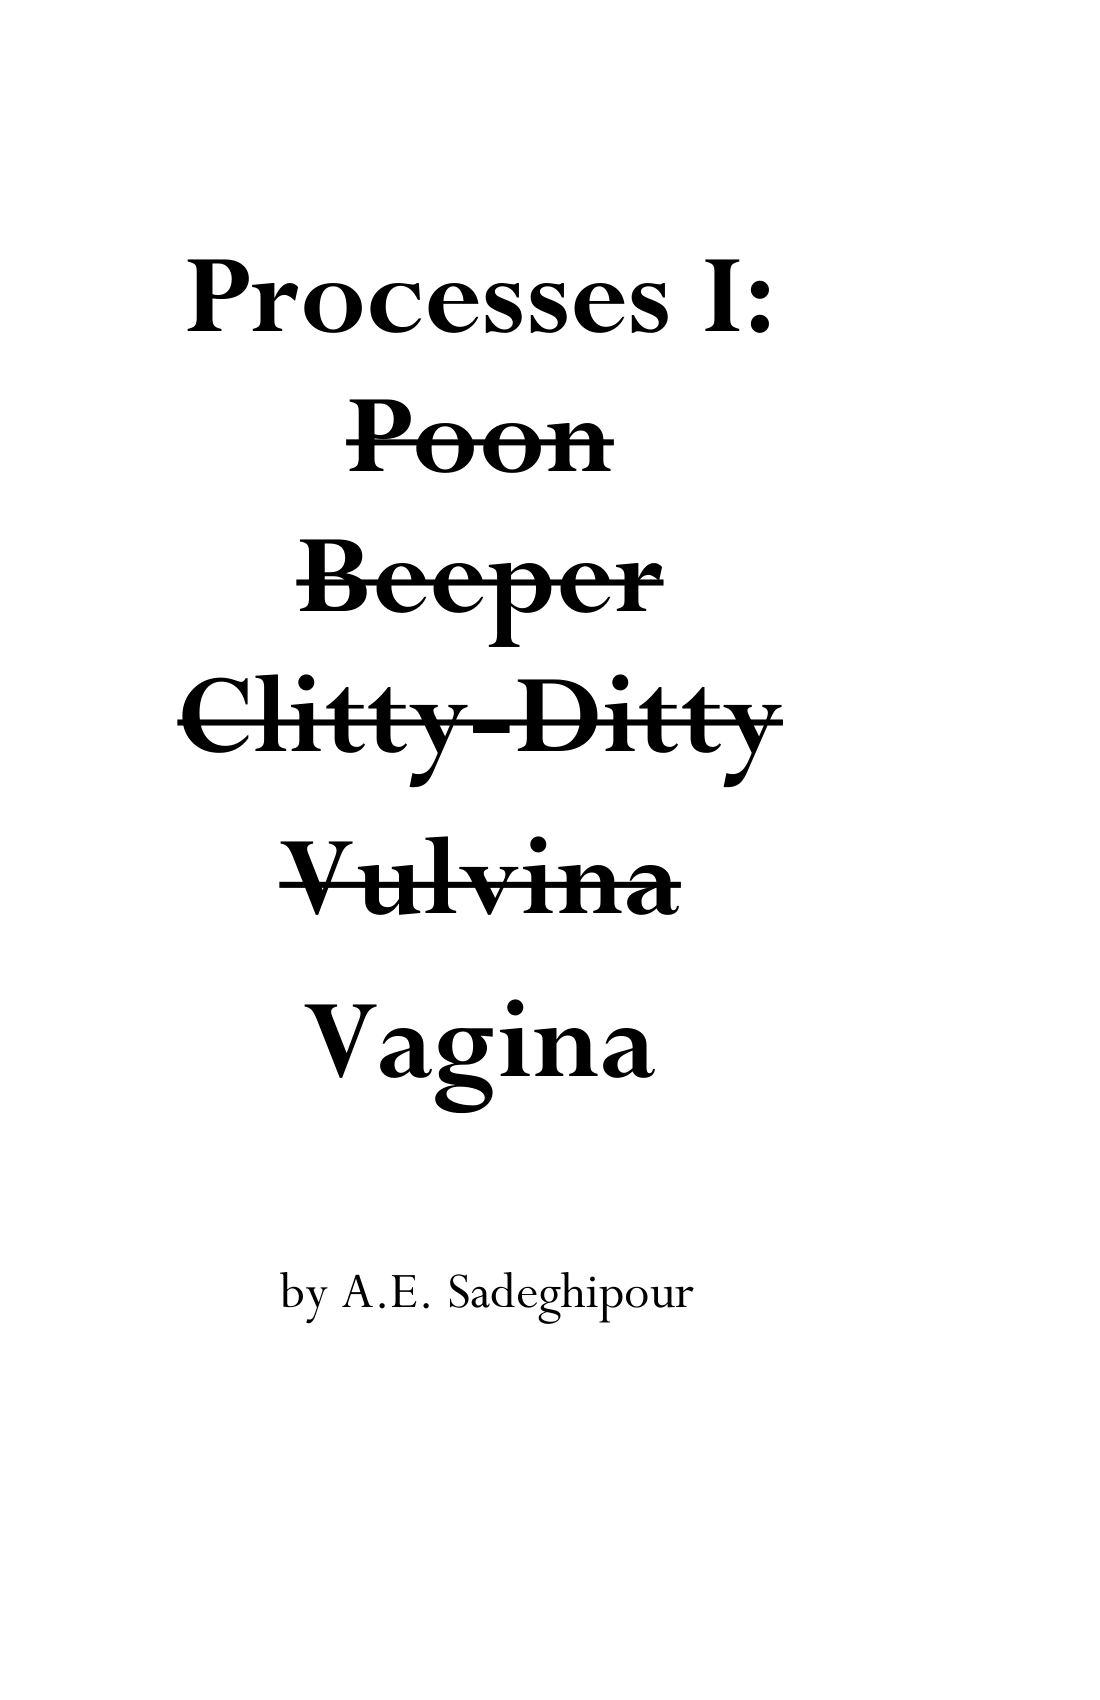 Processes I_ Vaginas BOOK-01